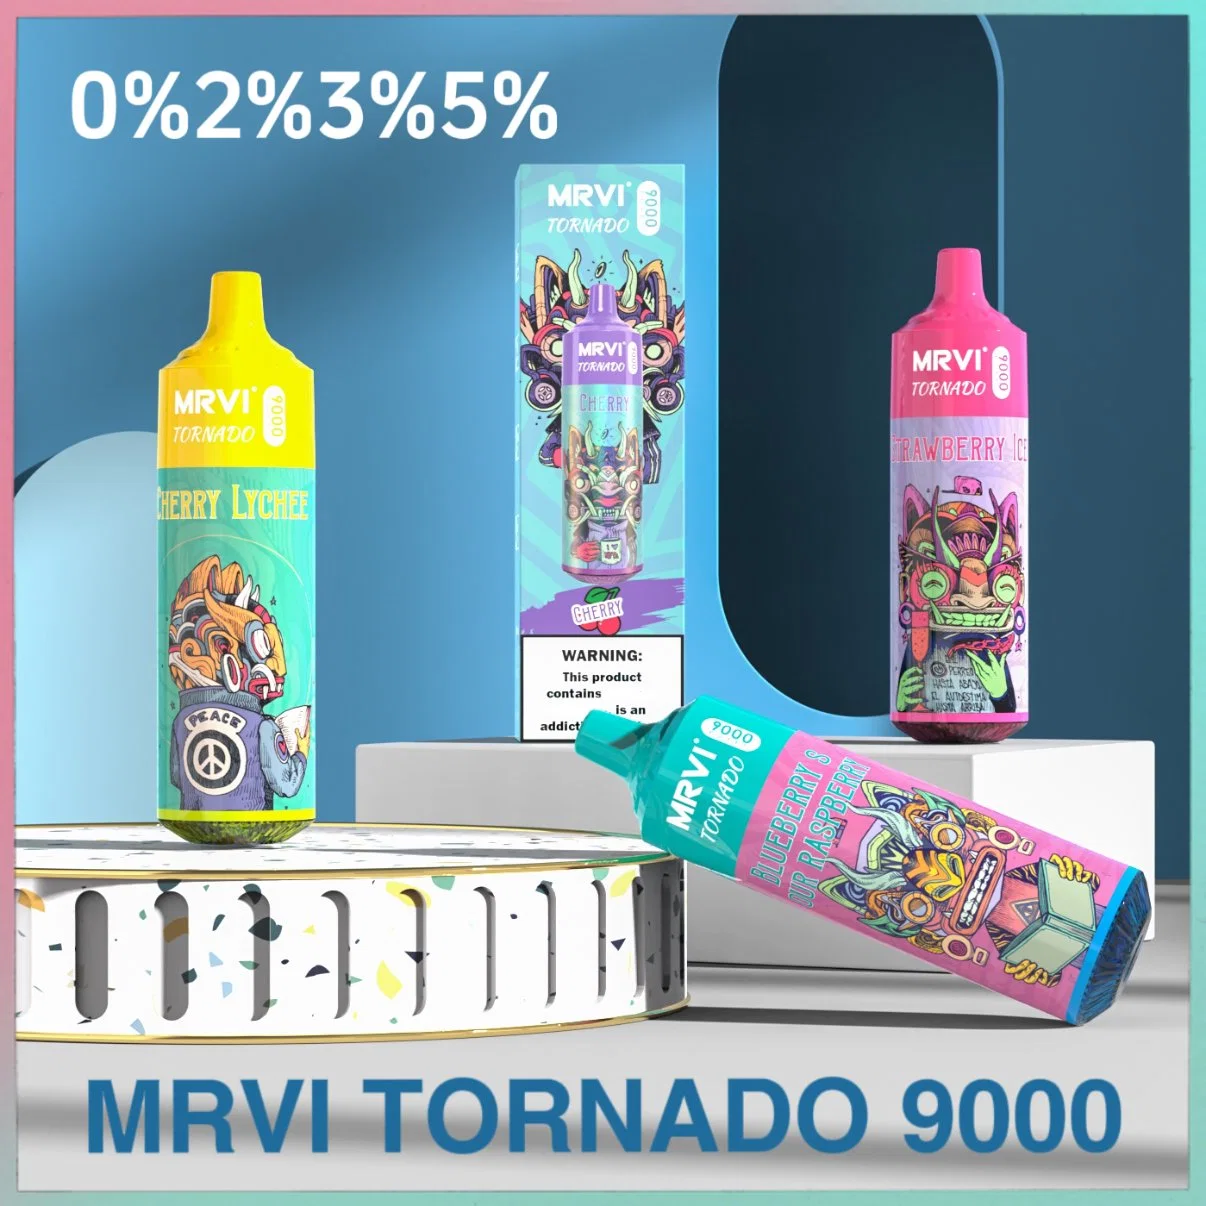 Original Mrvi Tornado 9000 Einweg-Vape Pen 0%2%3%5% blinkendes RGB Tank Design 850mAh Typ-C wiederaufladbare einmal Randm Tornado 7000 Puffs